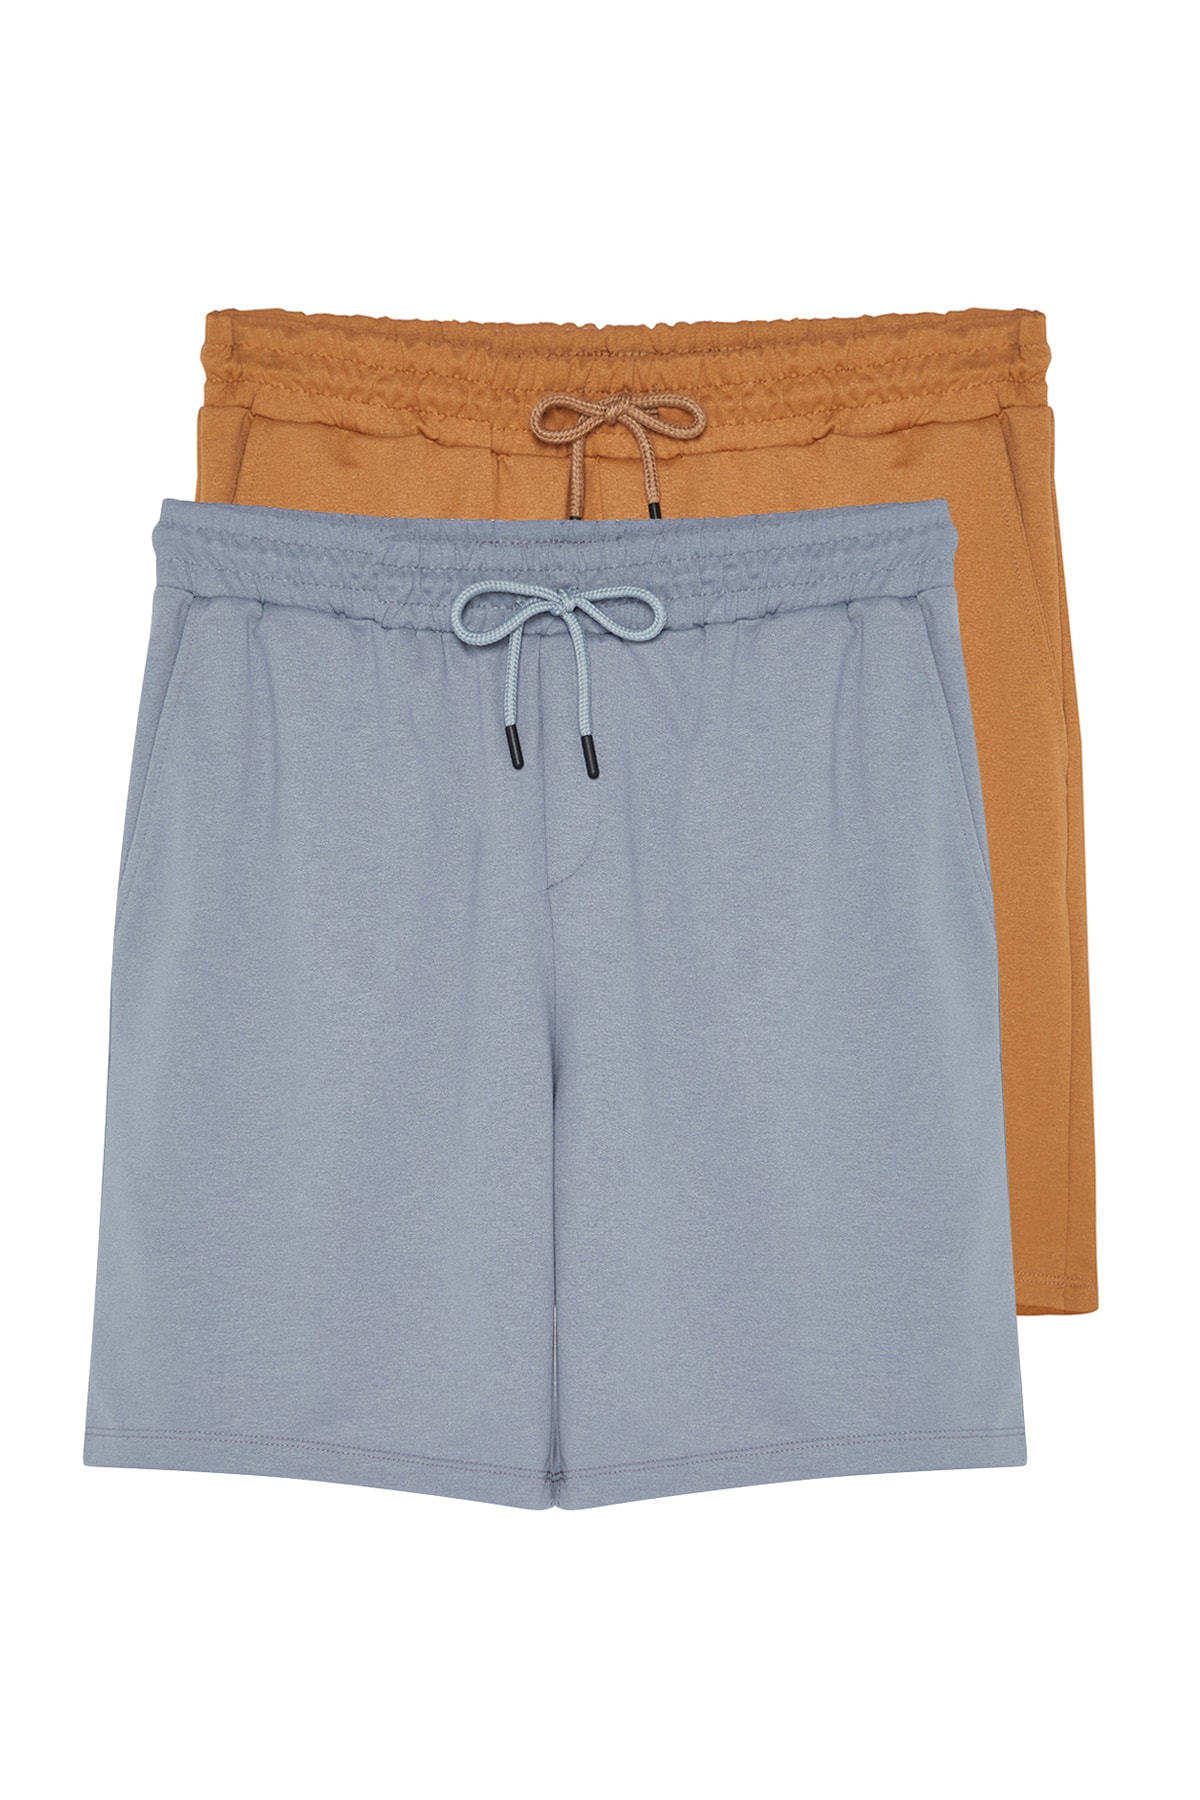 Trendyol Camel-Grey Men's Basic Regular/Normal Cut Plain 2-Pack Shorts